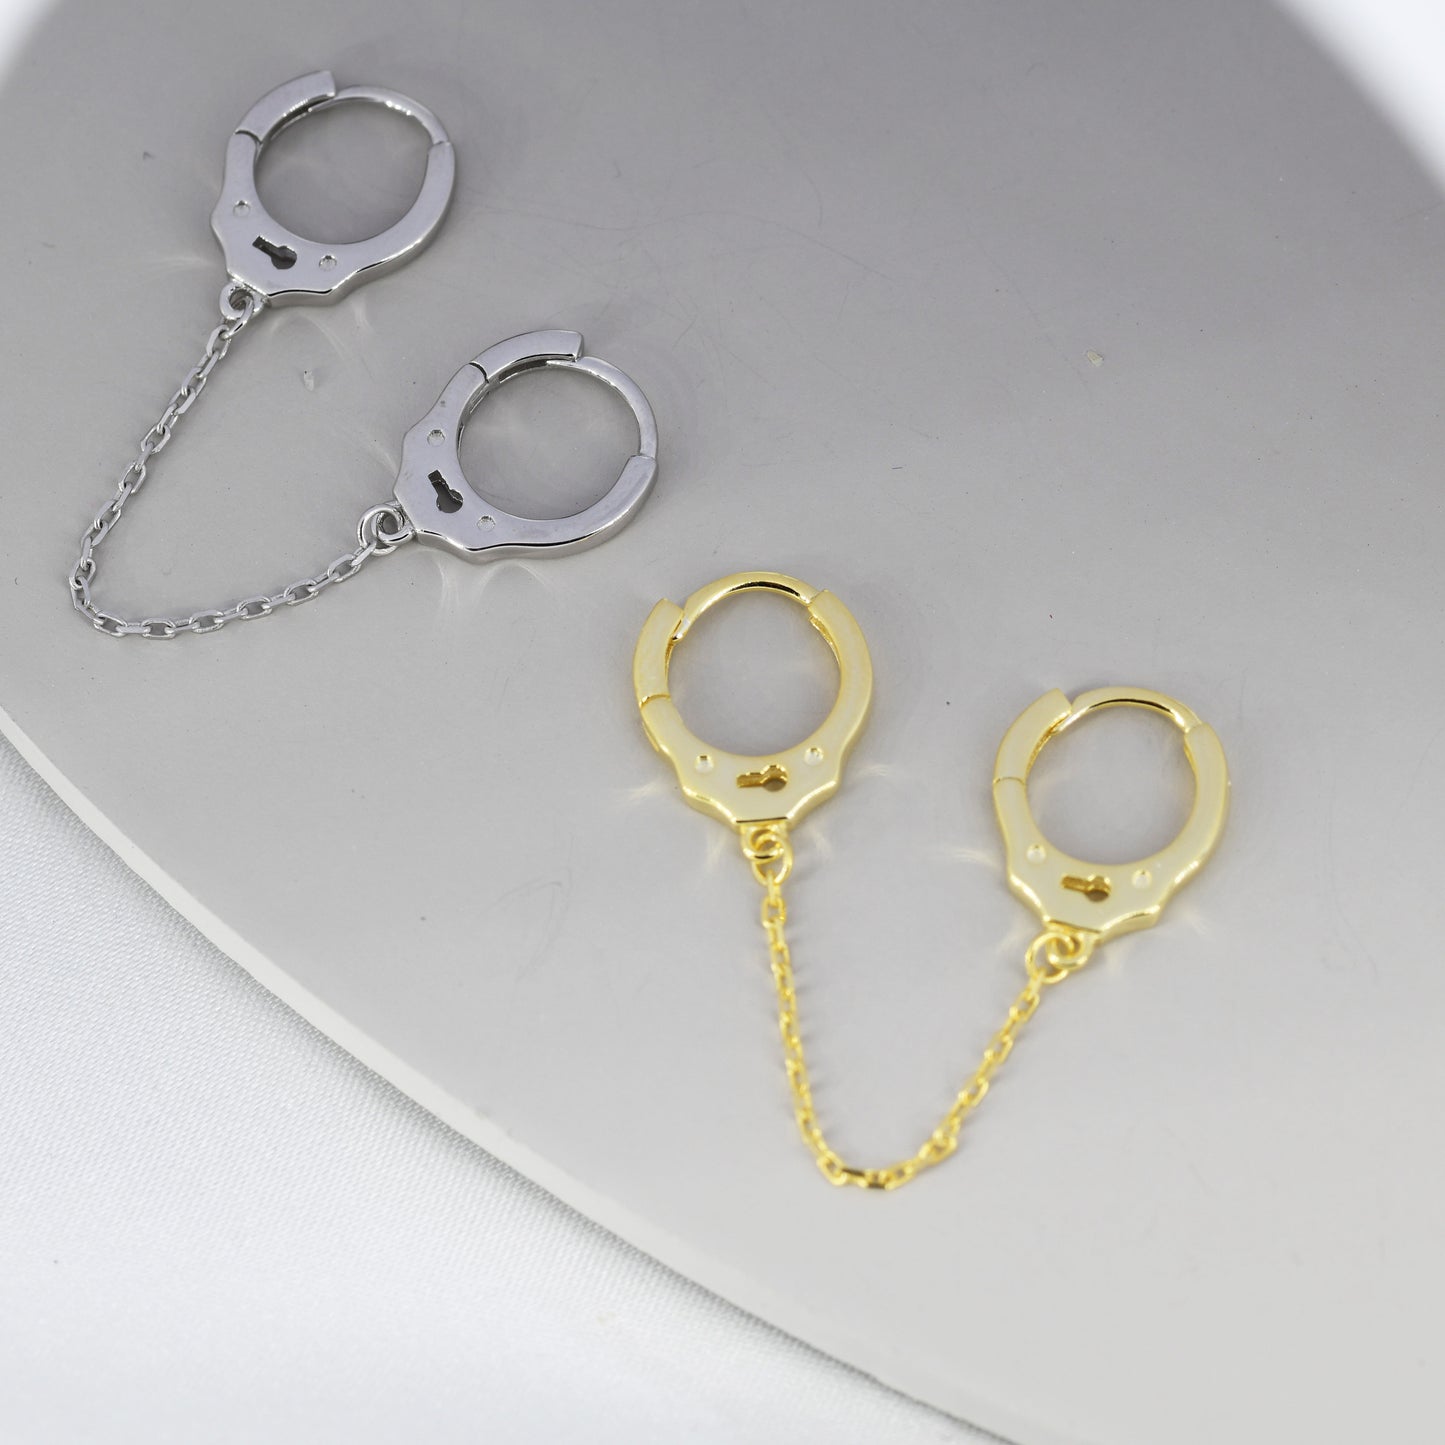 Handcuff Hoop Earrings with a Linking Chain, Silver or Gold, Chained  Hoop Earrings, Linked Hoops, Linked Hoops, Double Piercing Earrings